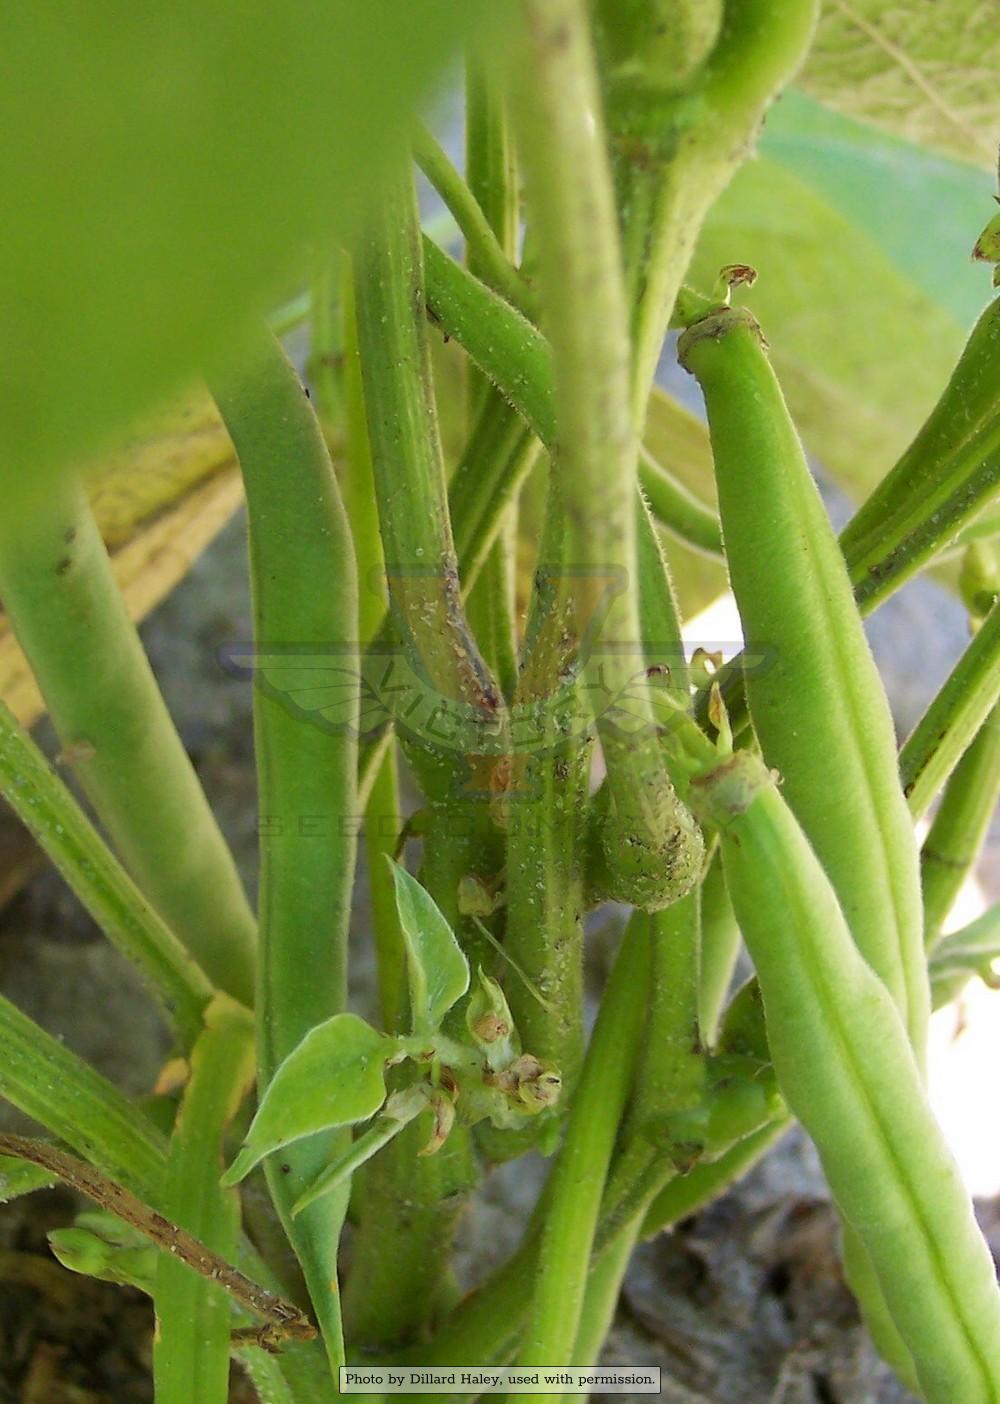 Topcrop (Top Crop) Bush Green Bean